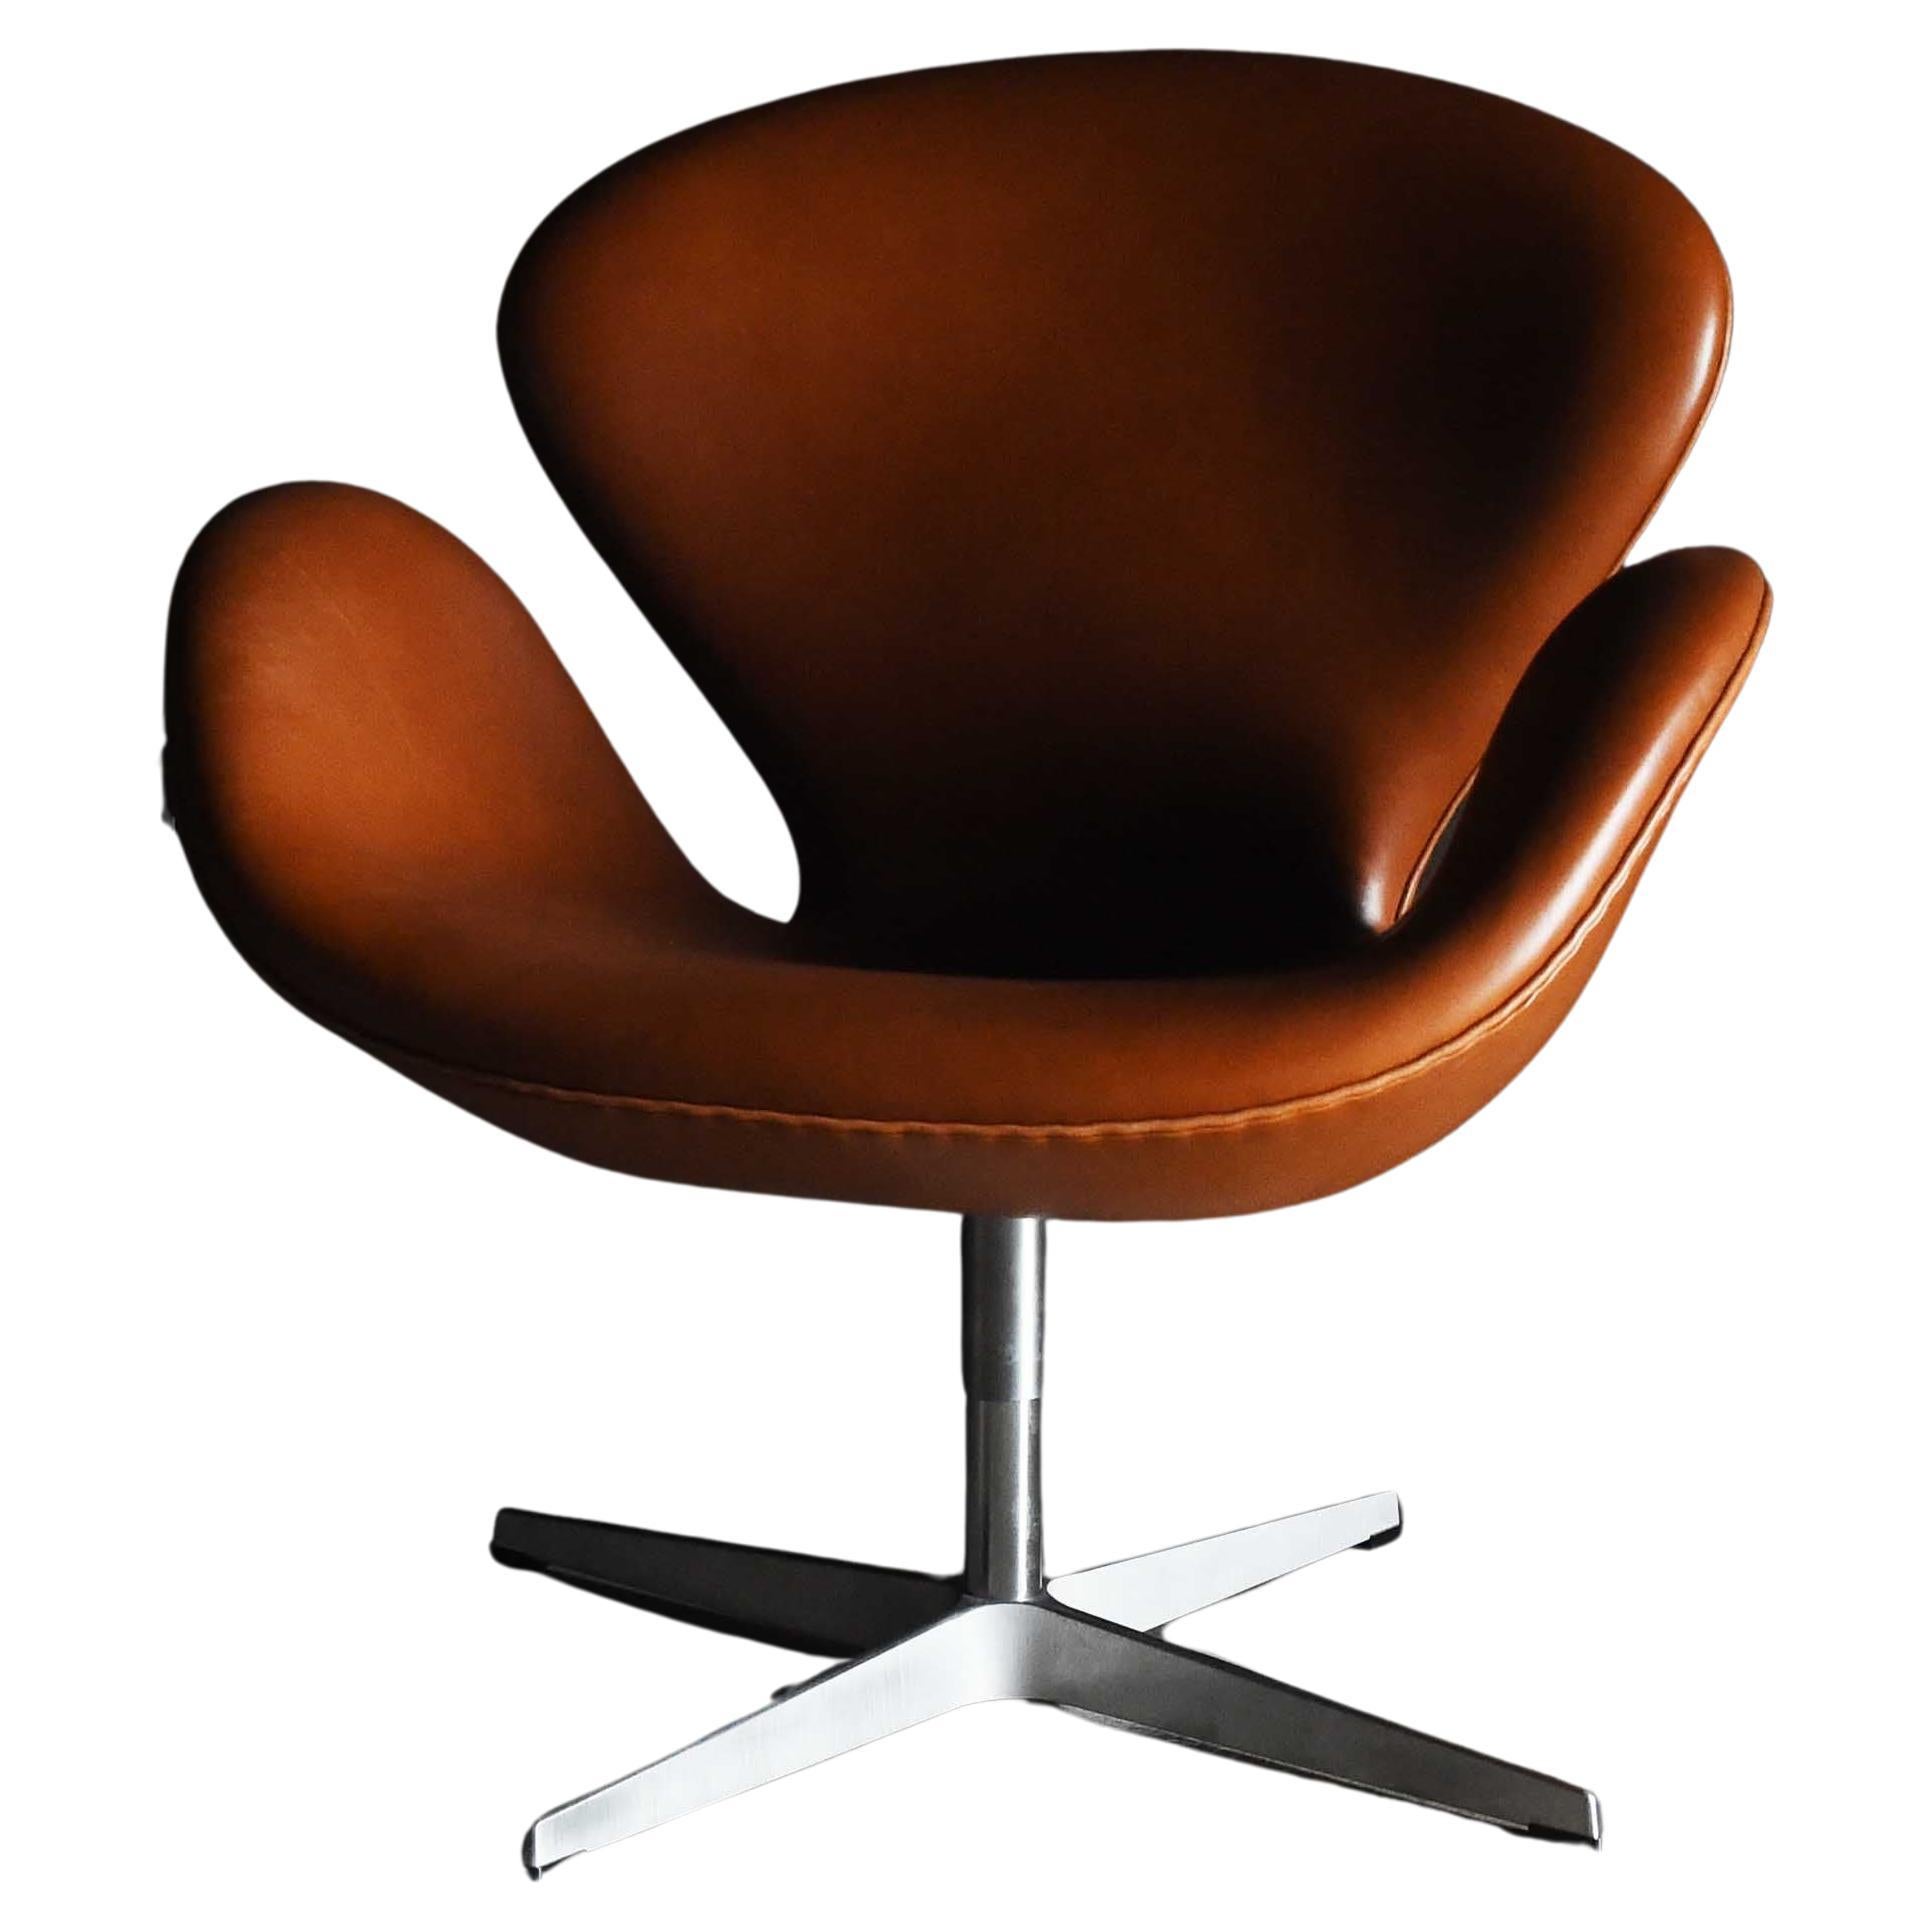 Arne Jacobsen "Swan chair" model3320